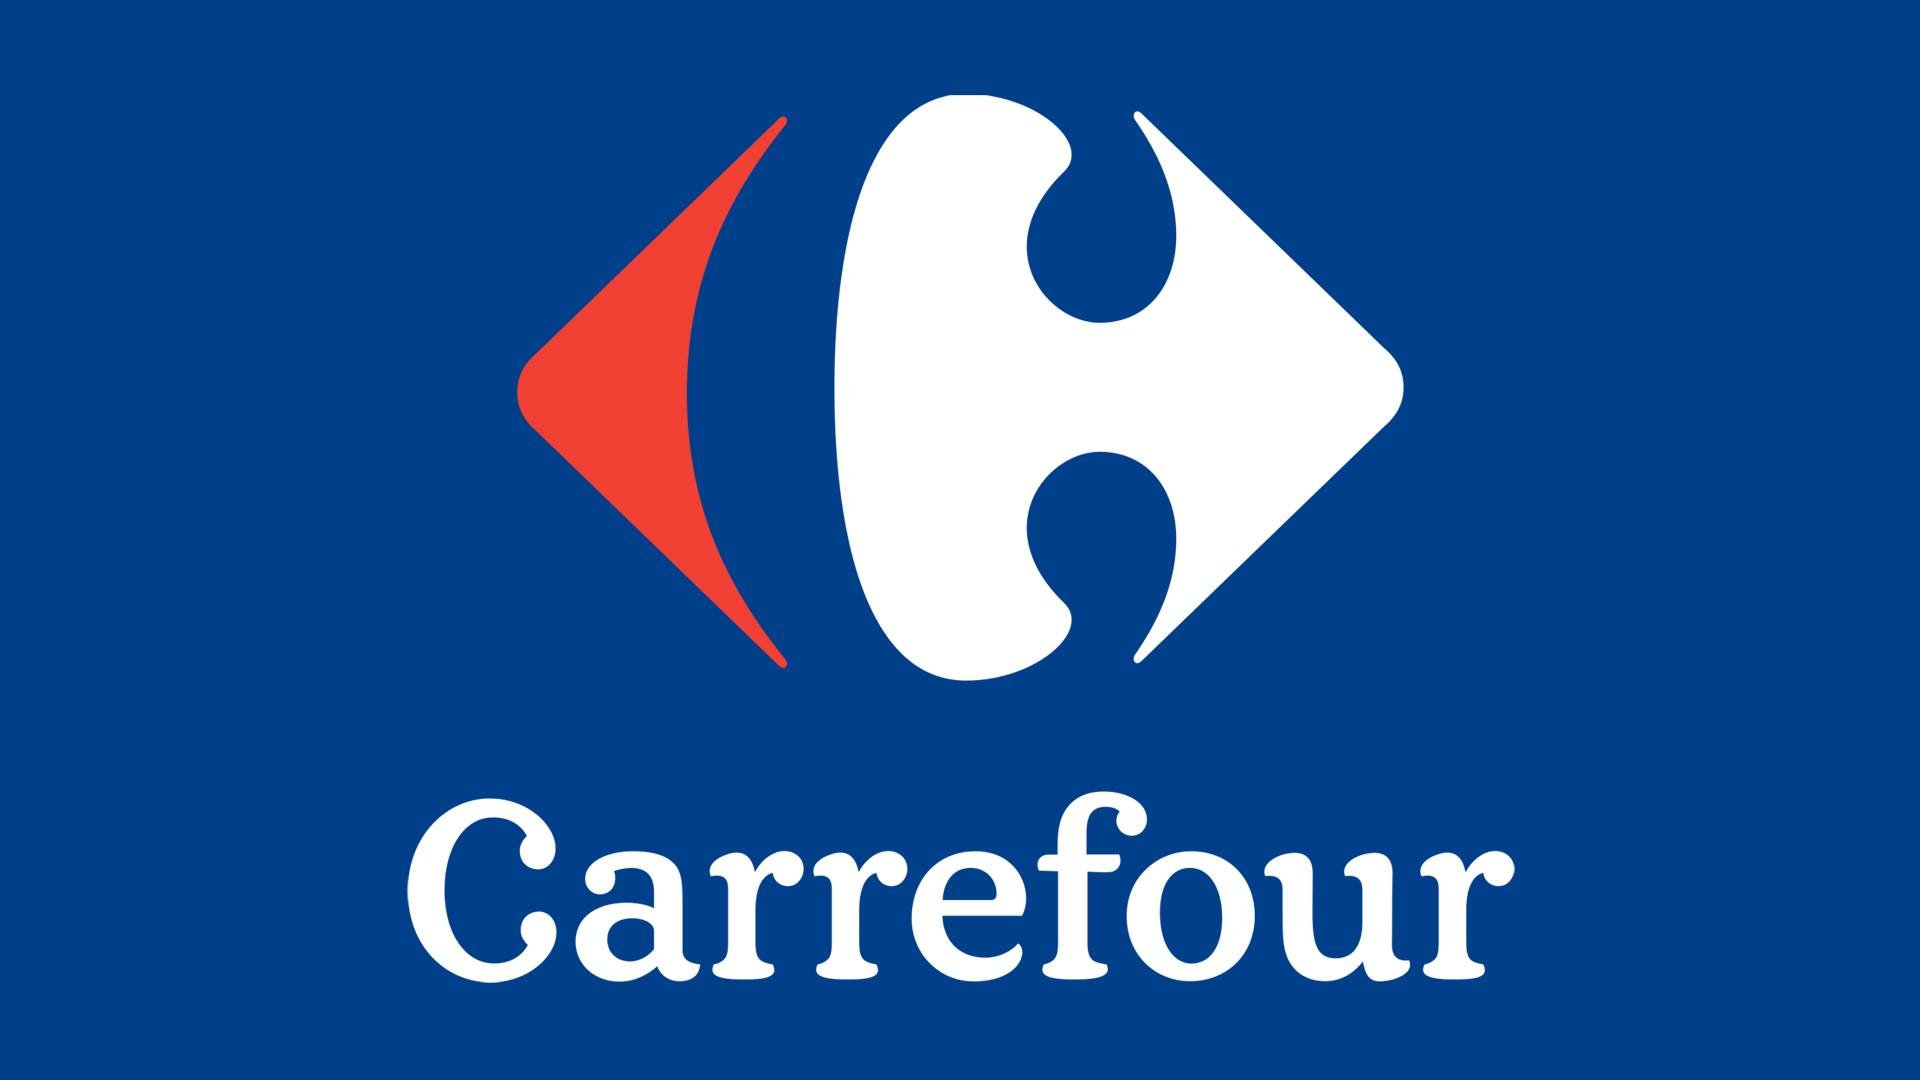 Carrefour Romania catalog